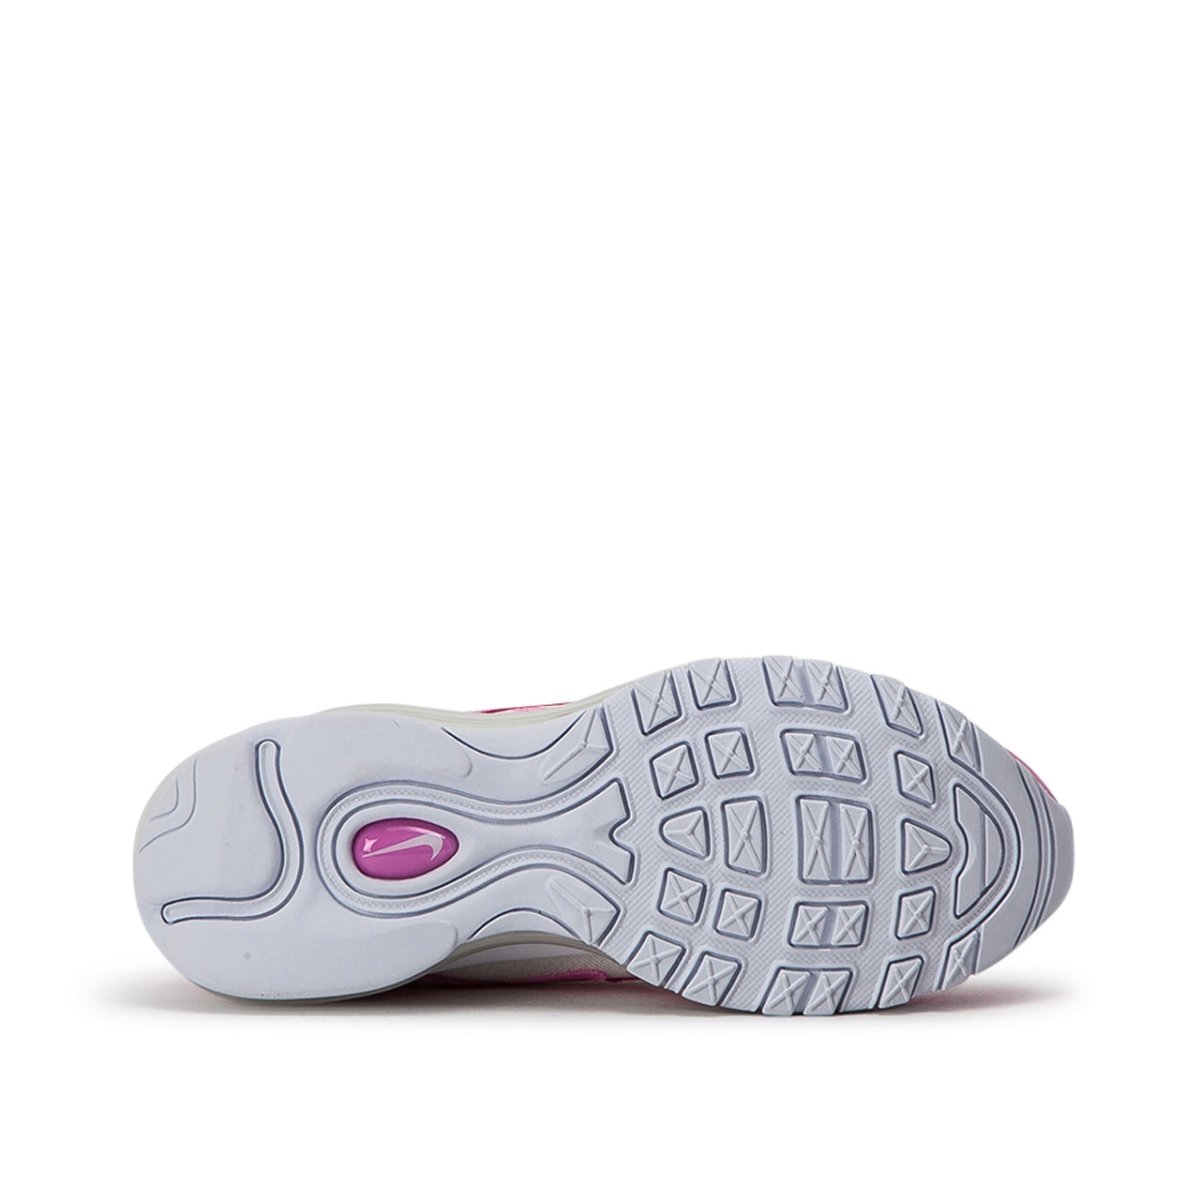 Nike WMNS Air Max 97 Essential (Weiß / Pink)  - Allike Store